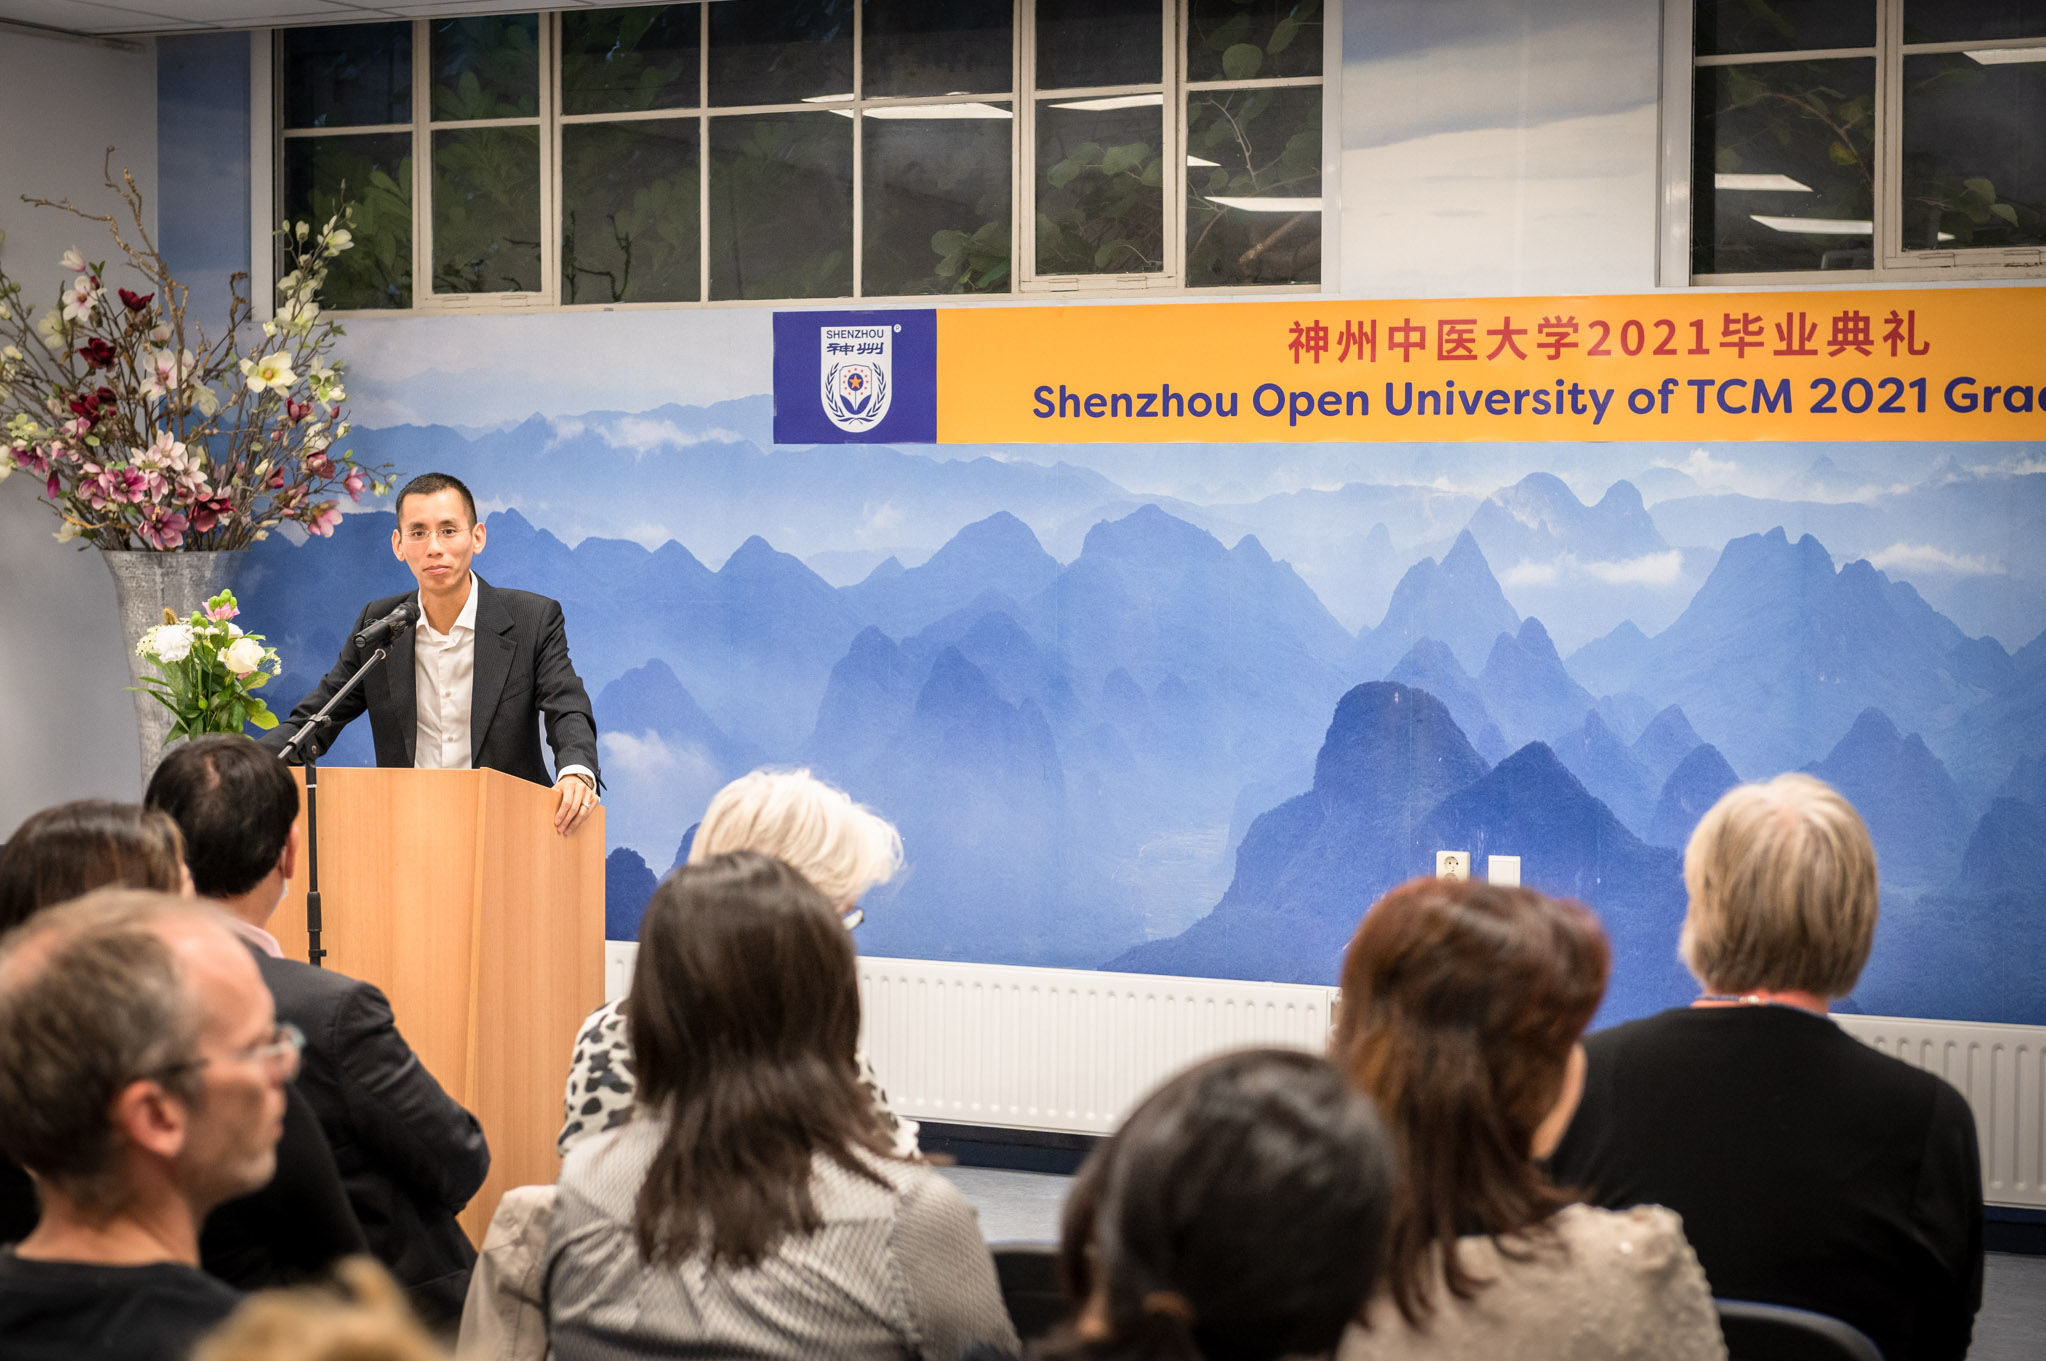 Opening by Rob van Hees Graduation 2021 Shenzhou Open University of TCM